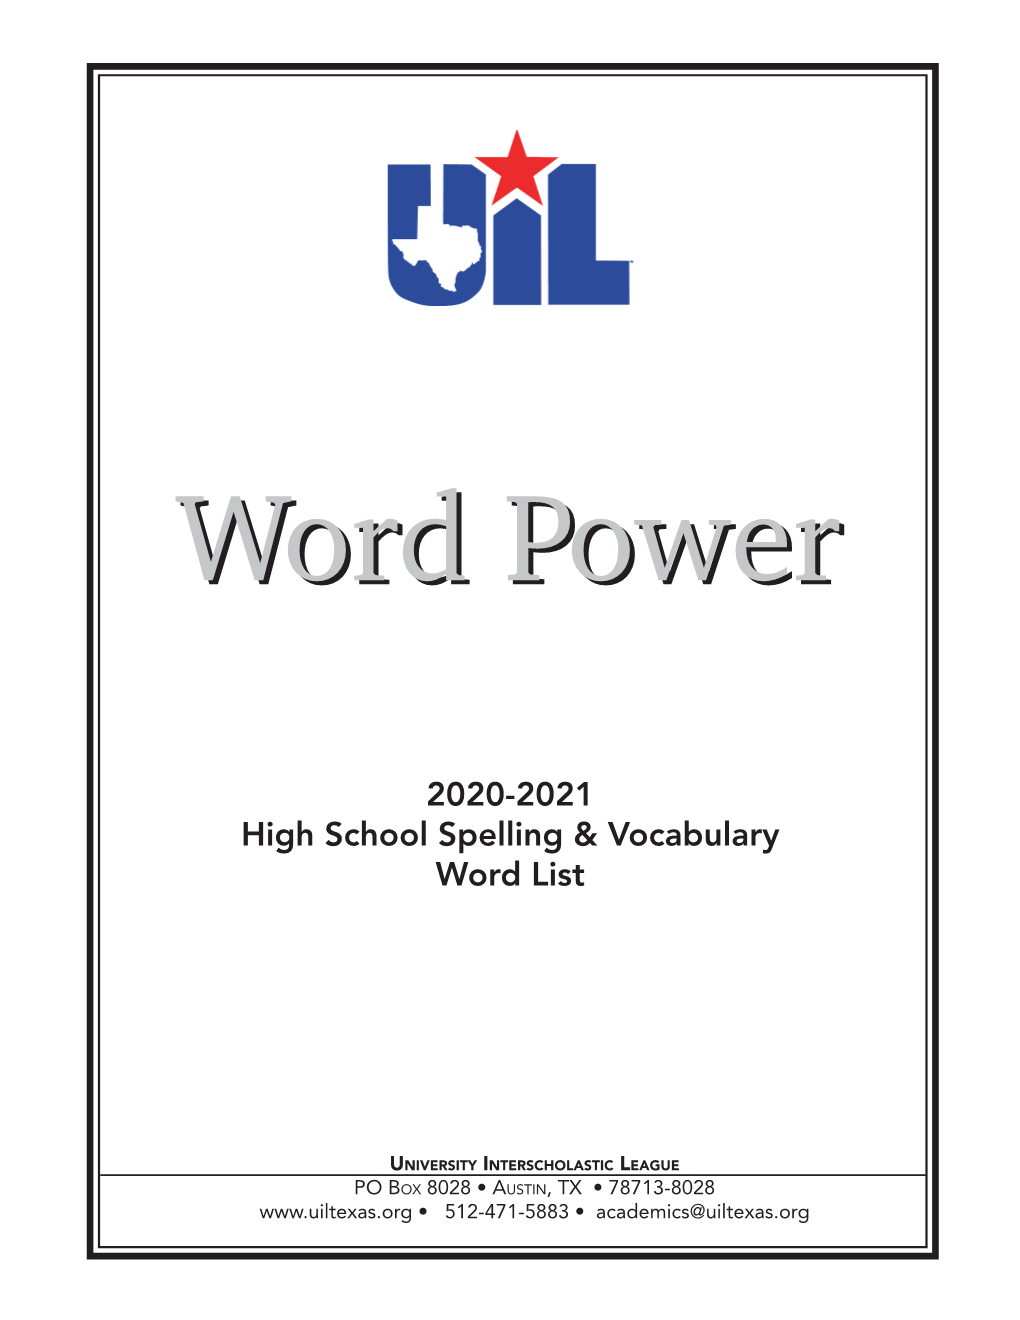 2020-2021 High School Spelling & Vocabulary Word List